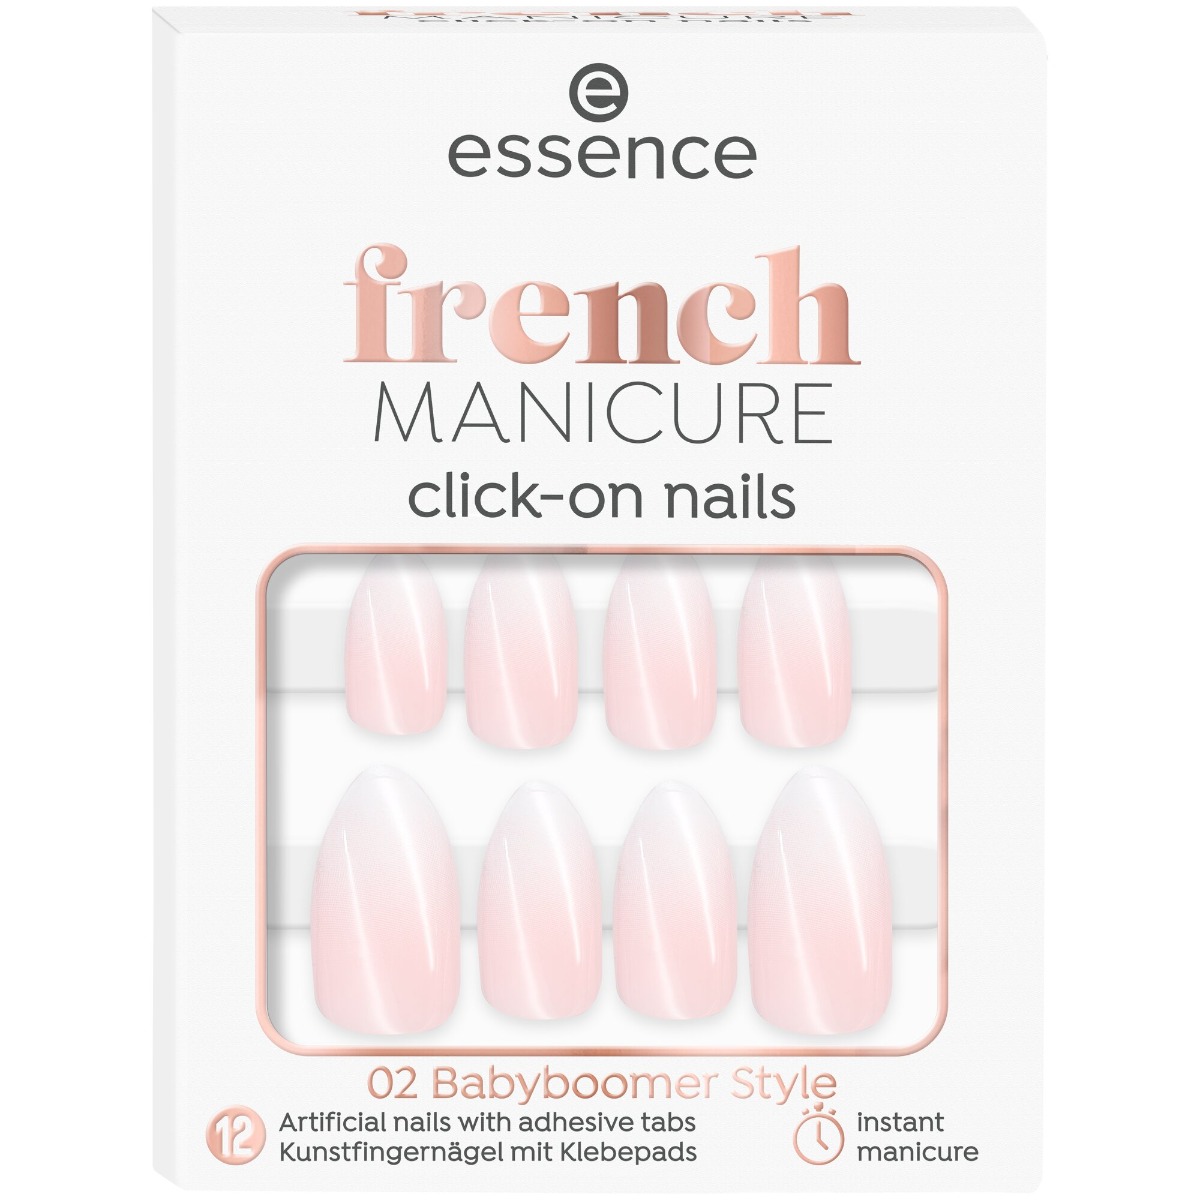 Unghii false french manicure click-on nails 02 - Babyboomer Style, 12 bucati, Essence